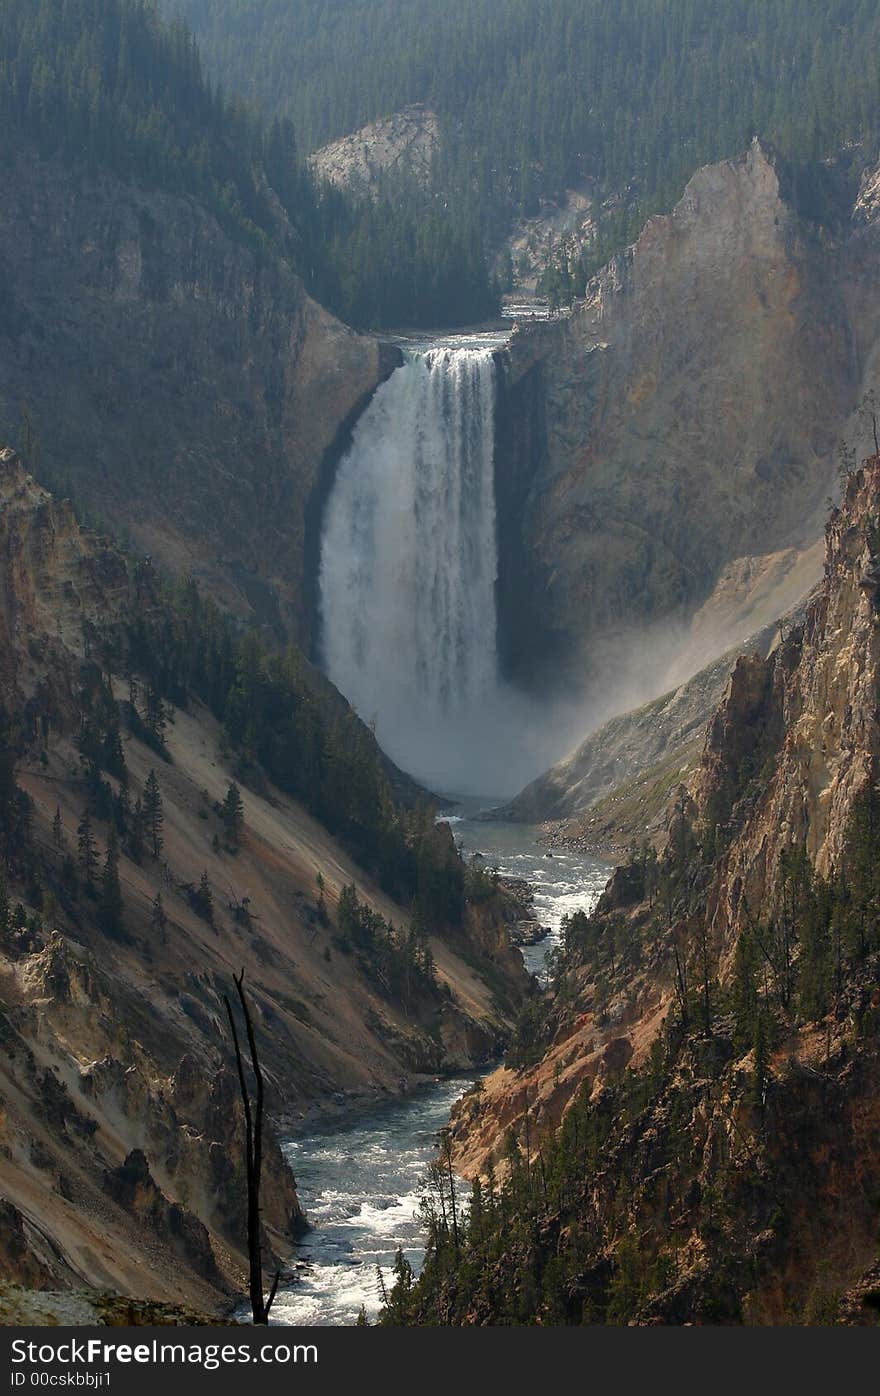 Big waterfall in Yellowstone National Park